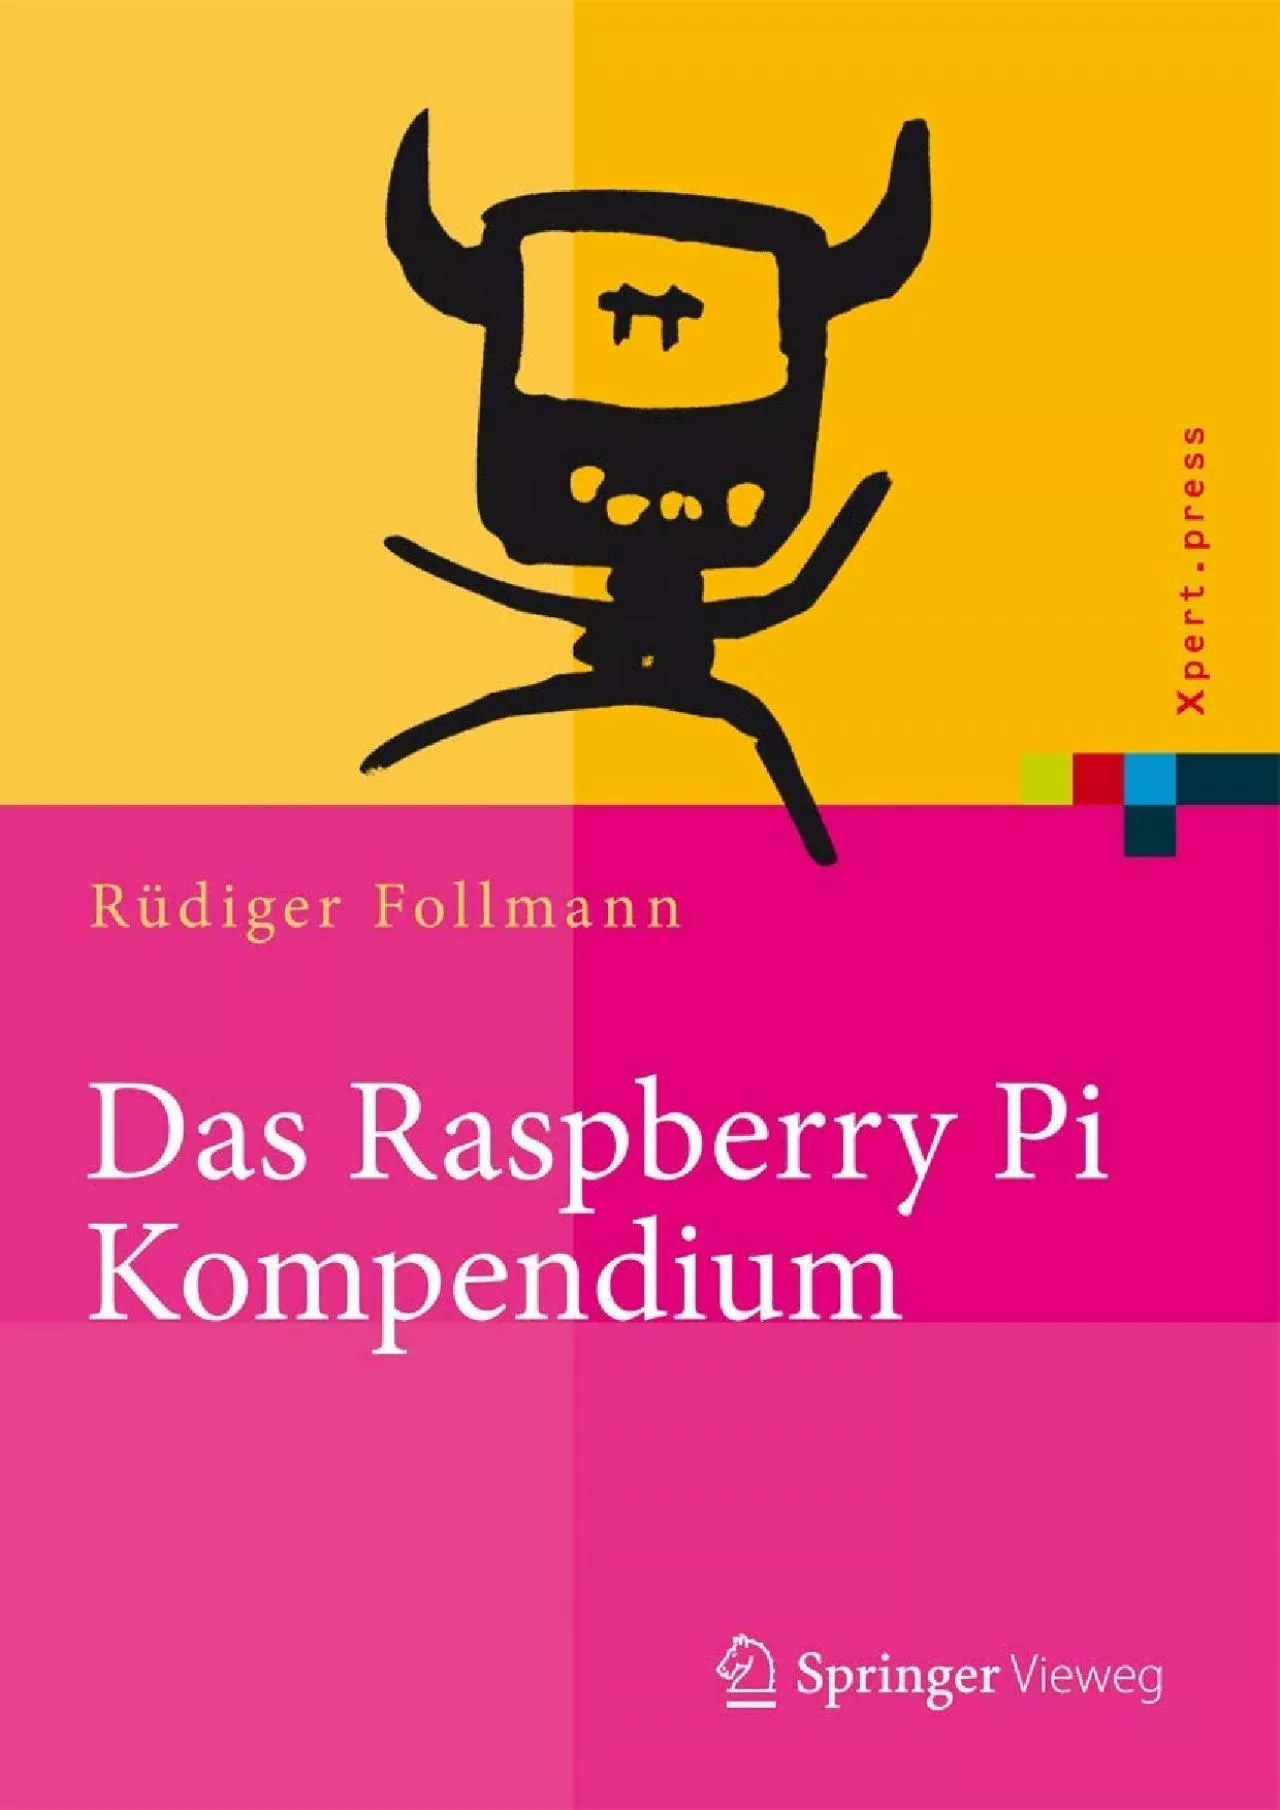 [PDF]-Das Raspberry Pi Kompendium (Xpert.press) (German Edition)